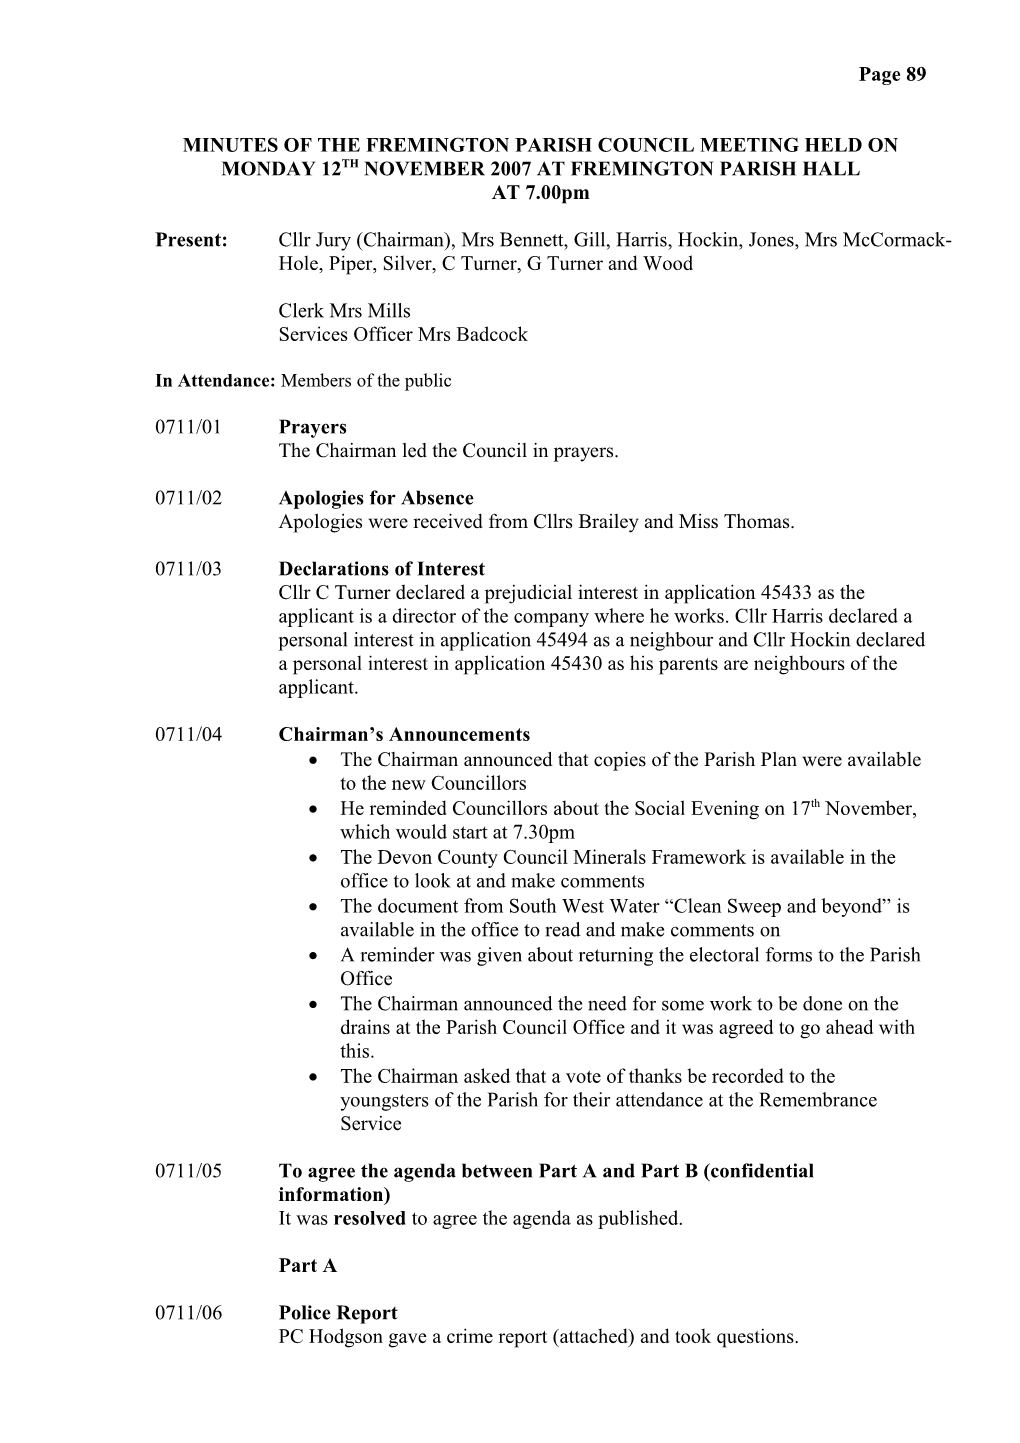 Minutes of the Fremington Parish Council Meeting Held on Monday 12Th November 2007 At